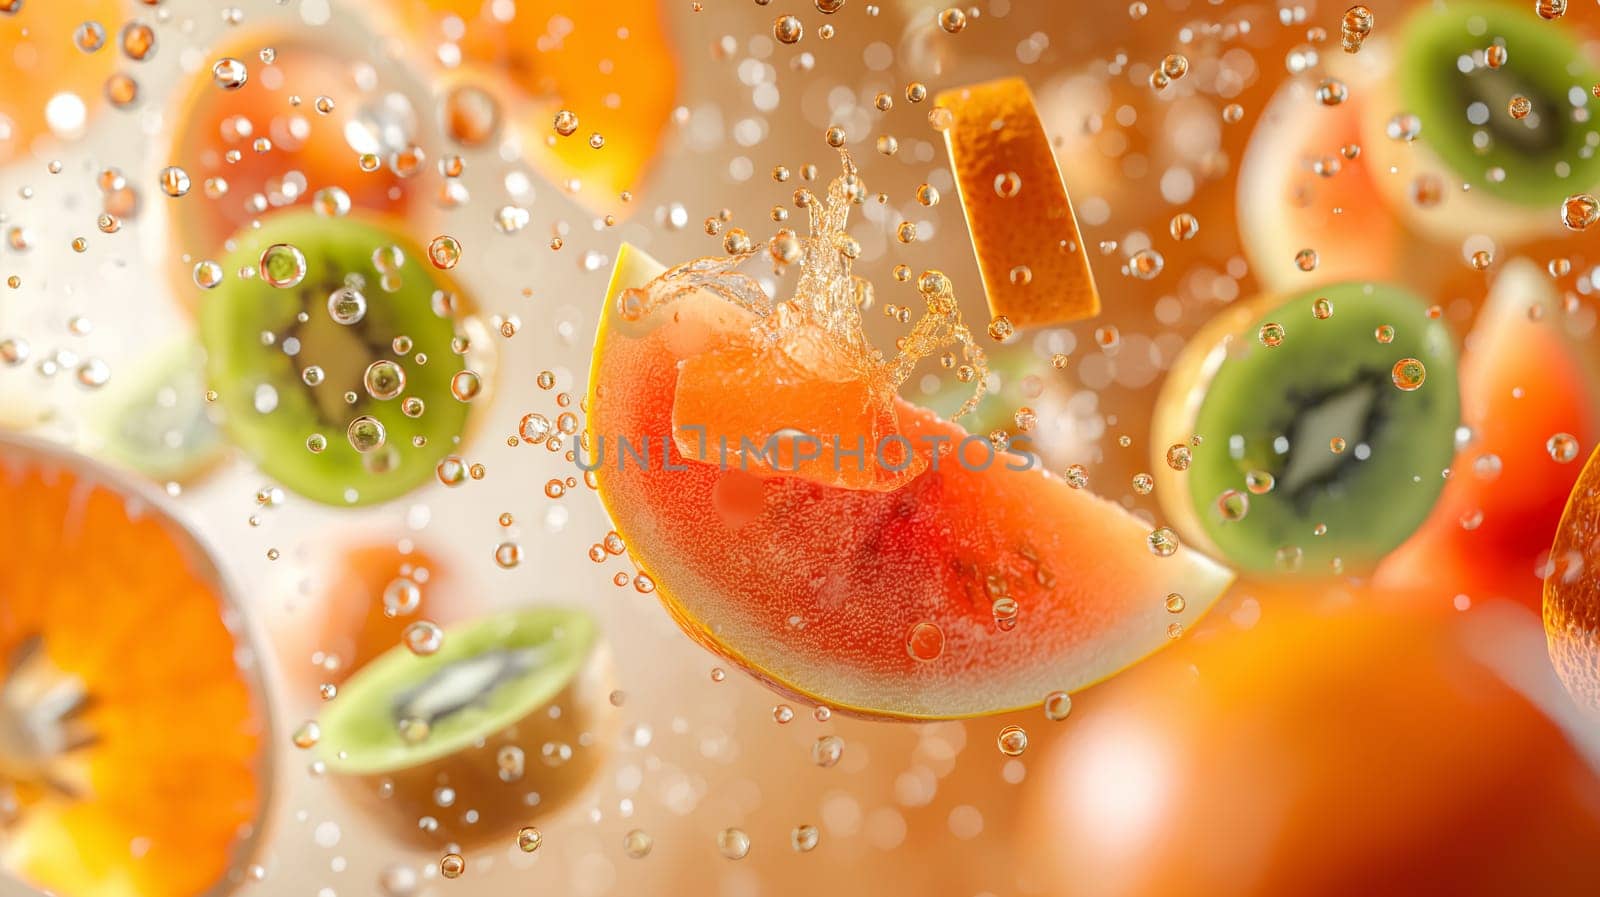 Fresh Fruits Splashing in Sparkling Water by chrisroll